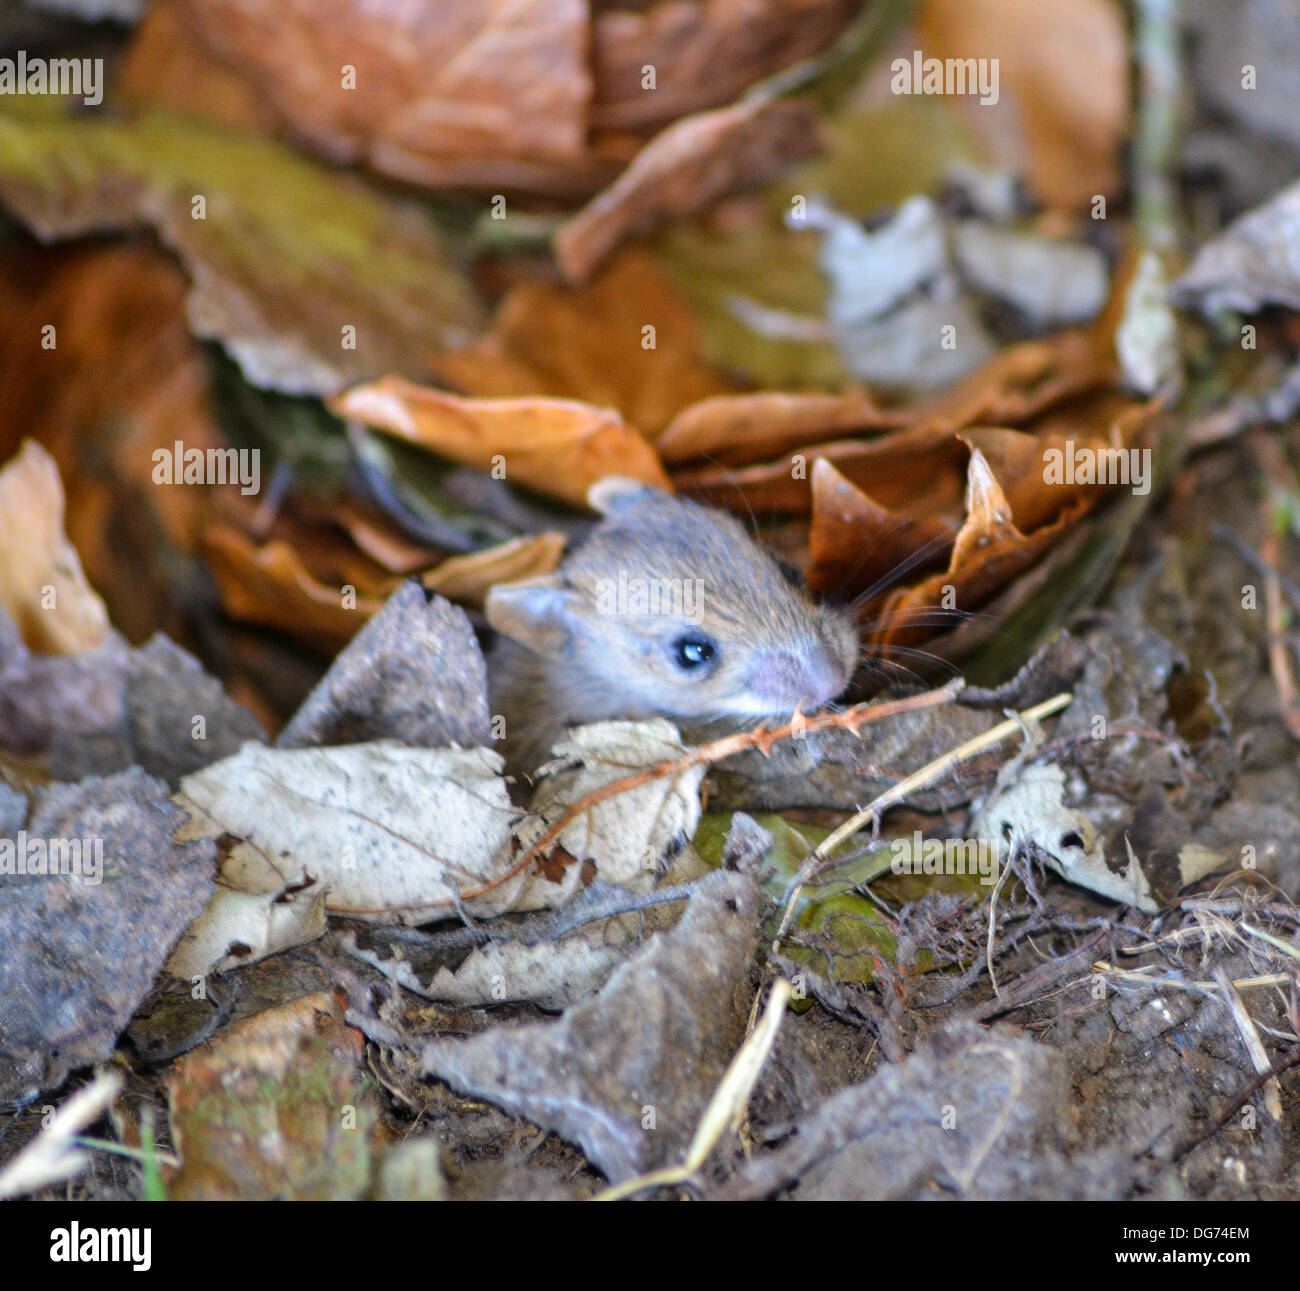 Junge Maus im nest Stockfoto